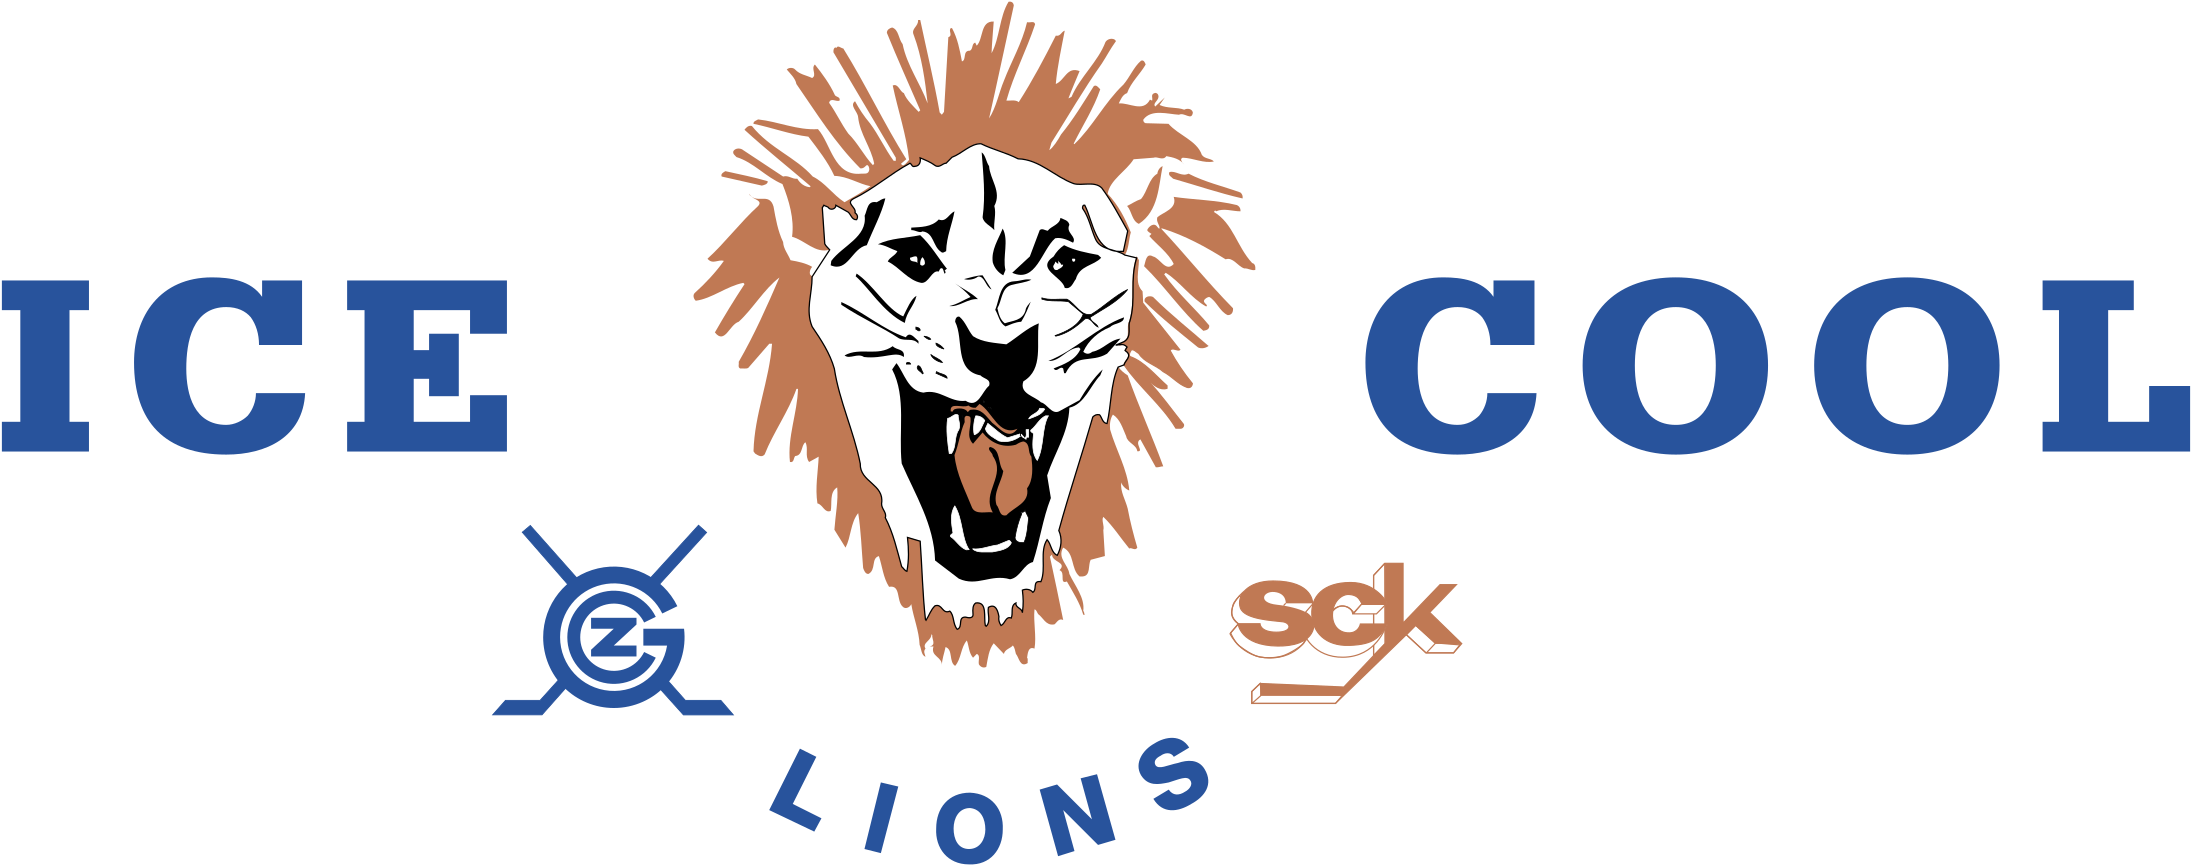 Icecool Lions Logo Png Transparent - Lion (2400x2400), Png Download